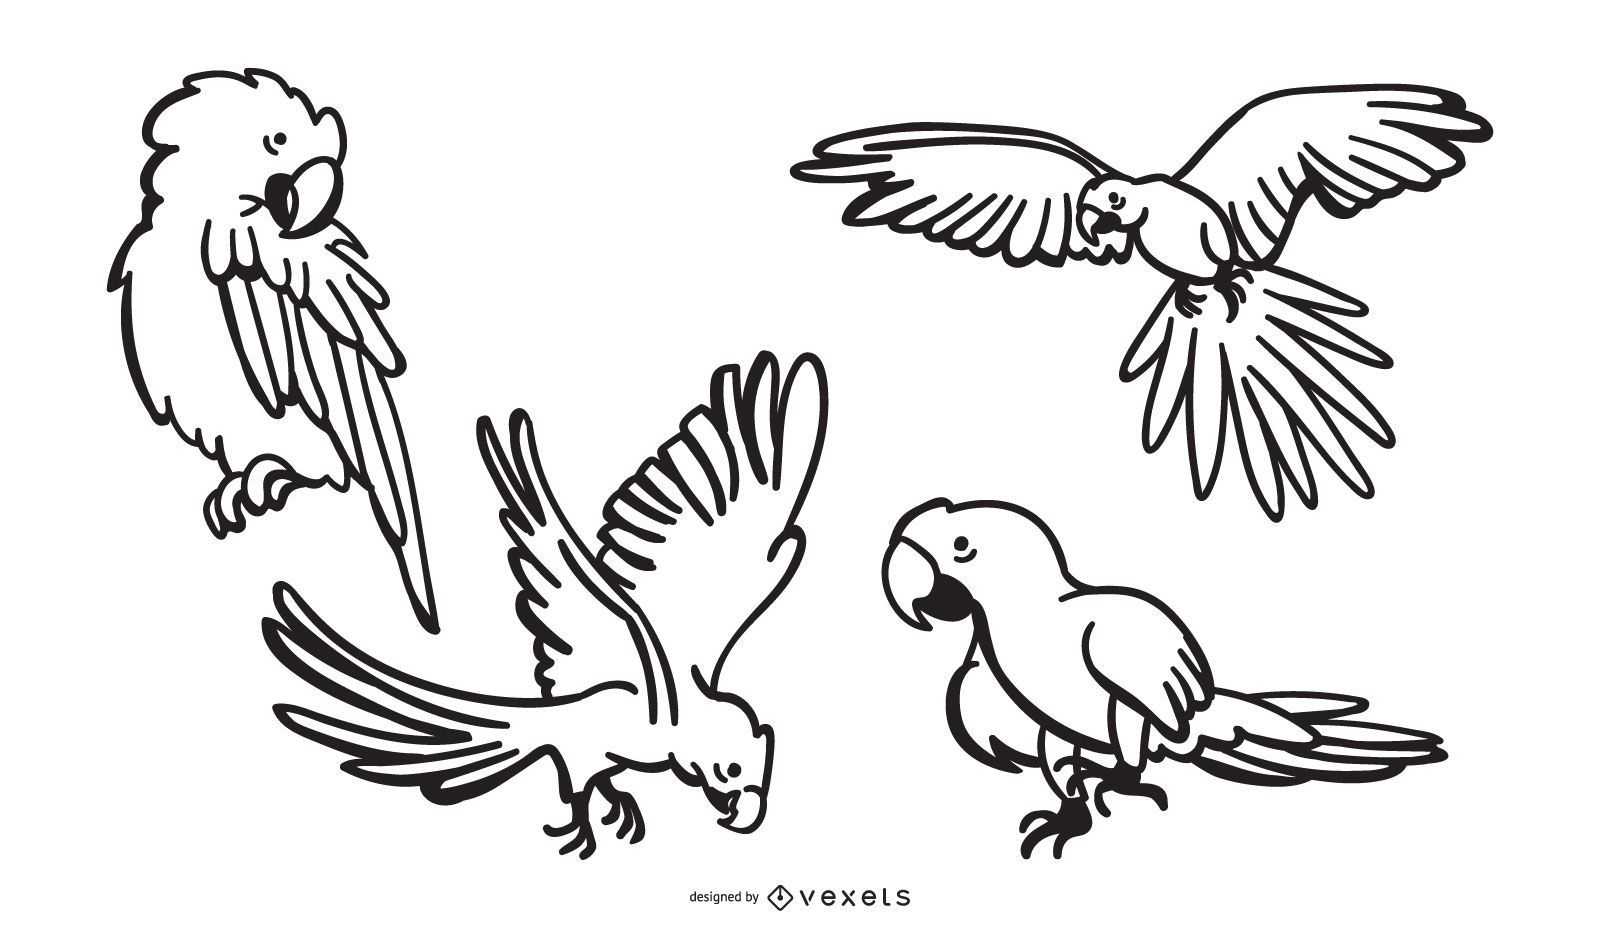 Parrot stroke designs